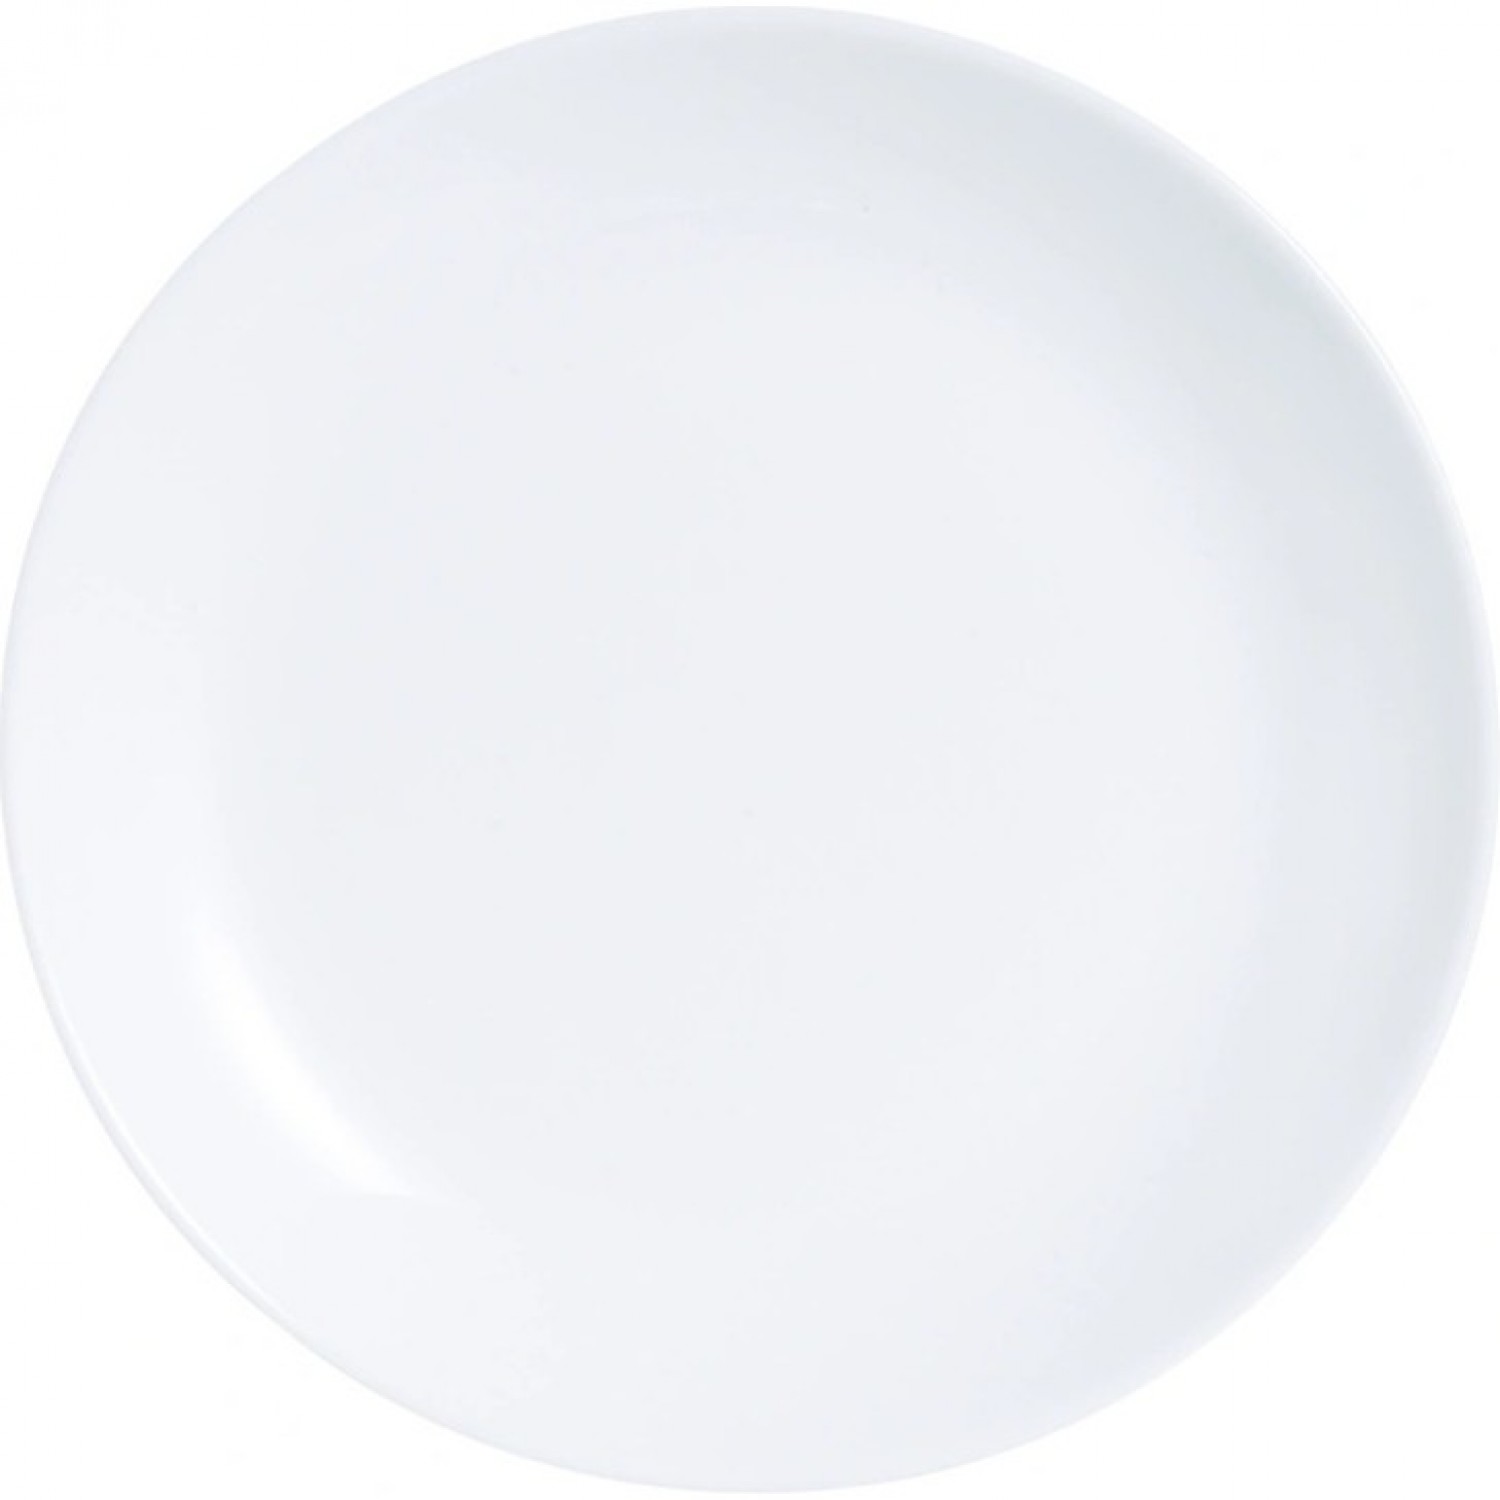 Тарелка обеденная ДИВАЛИ 25см LUMINARC D6905 (P3299) тарелка обеденная luminarc дивали нуар p0867 25см